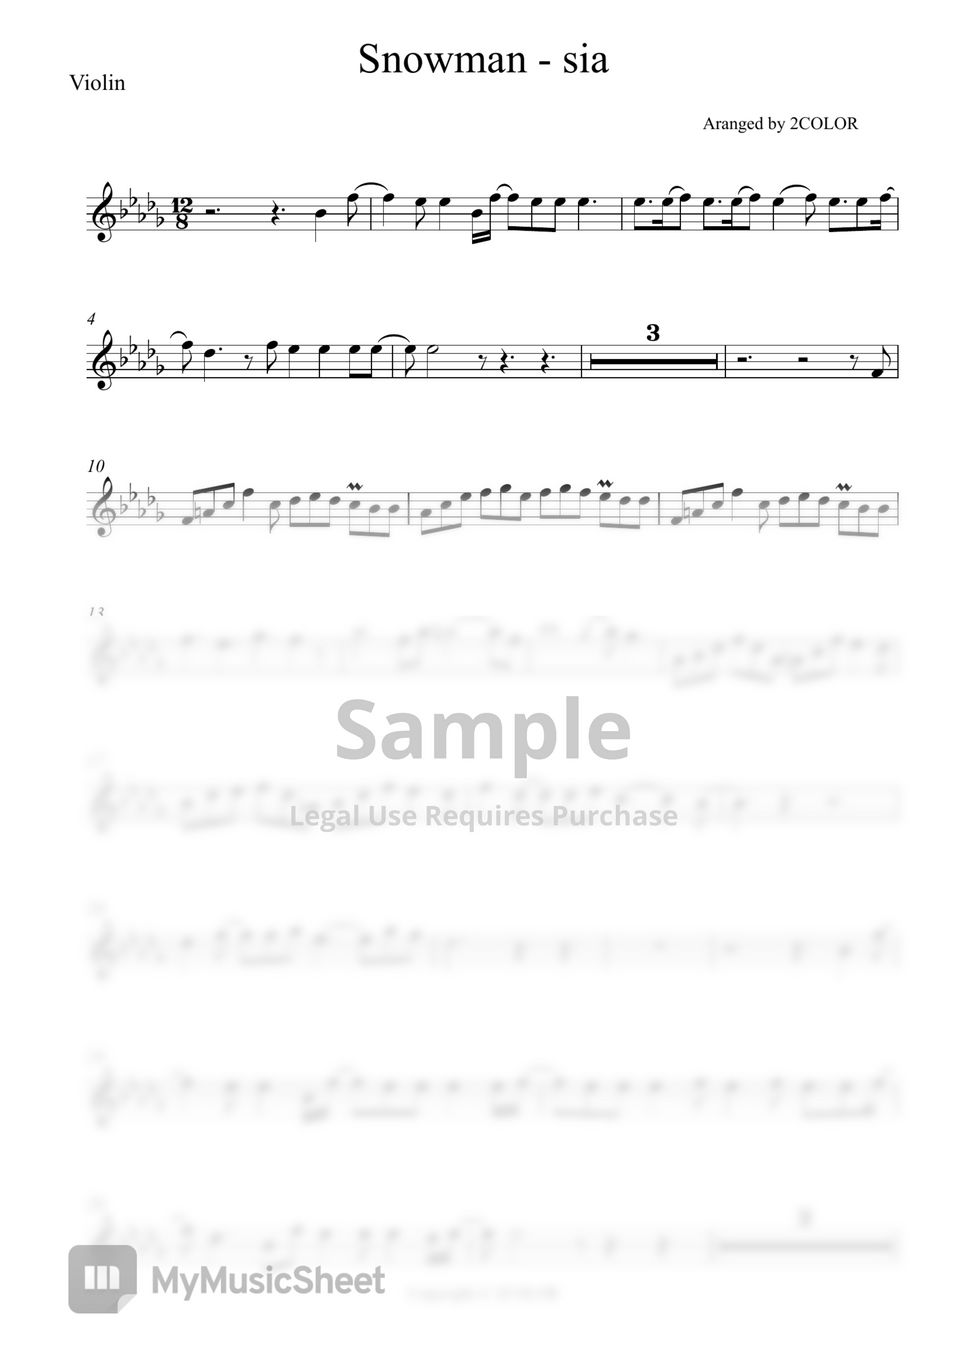 Sia - Snowman by 2COLOR flute, violin